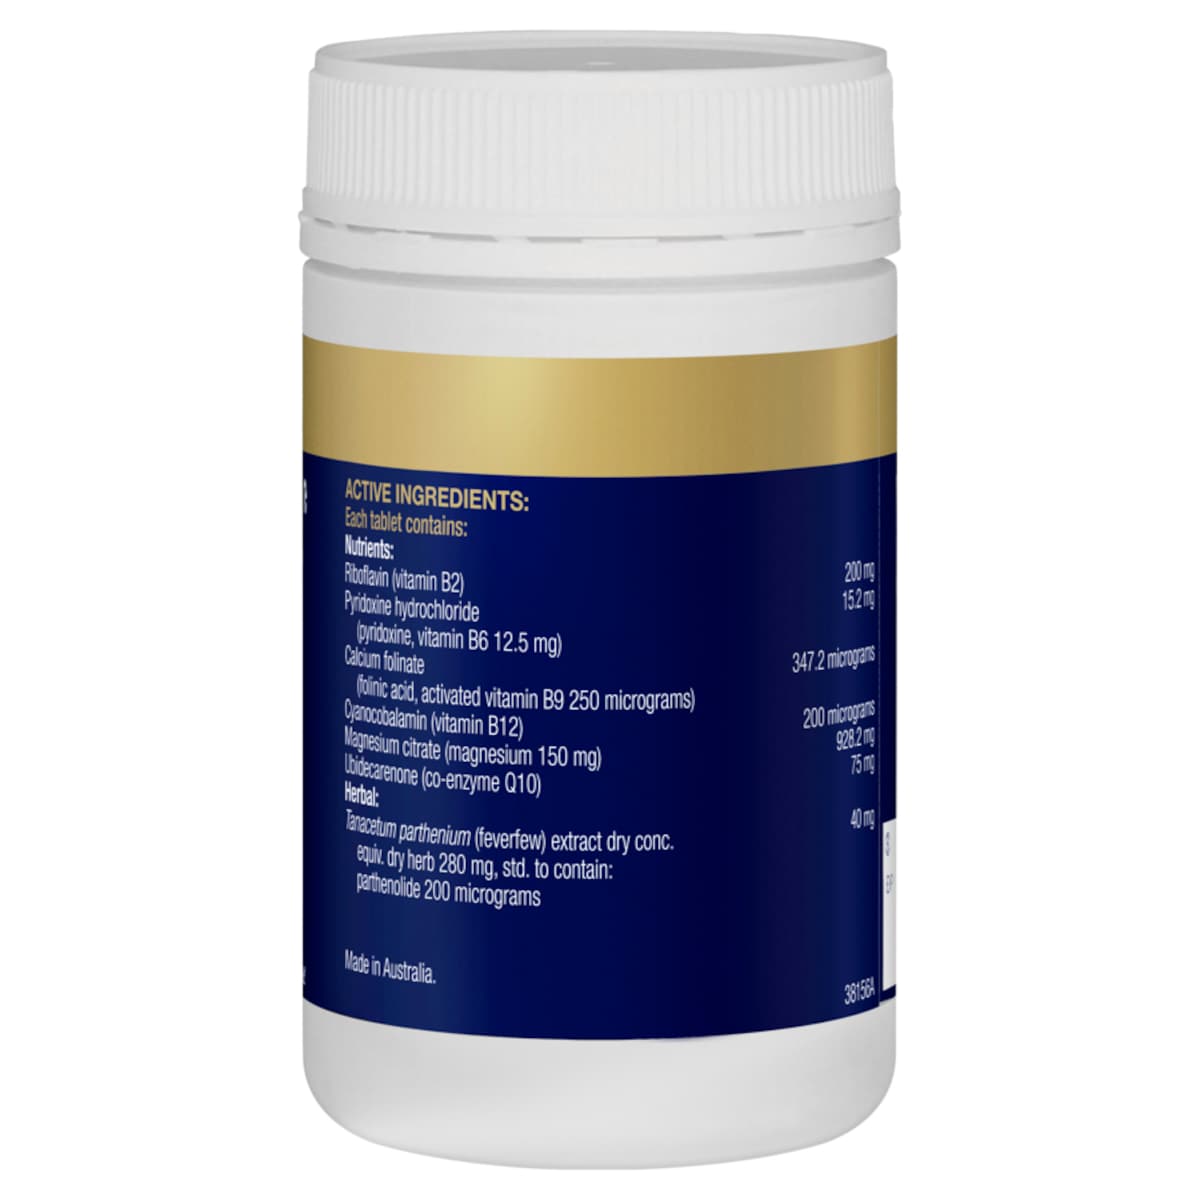 BioCeuticals Migraine Care 120 Tablets